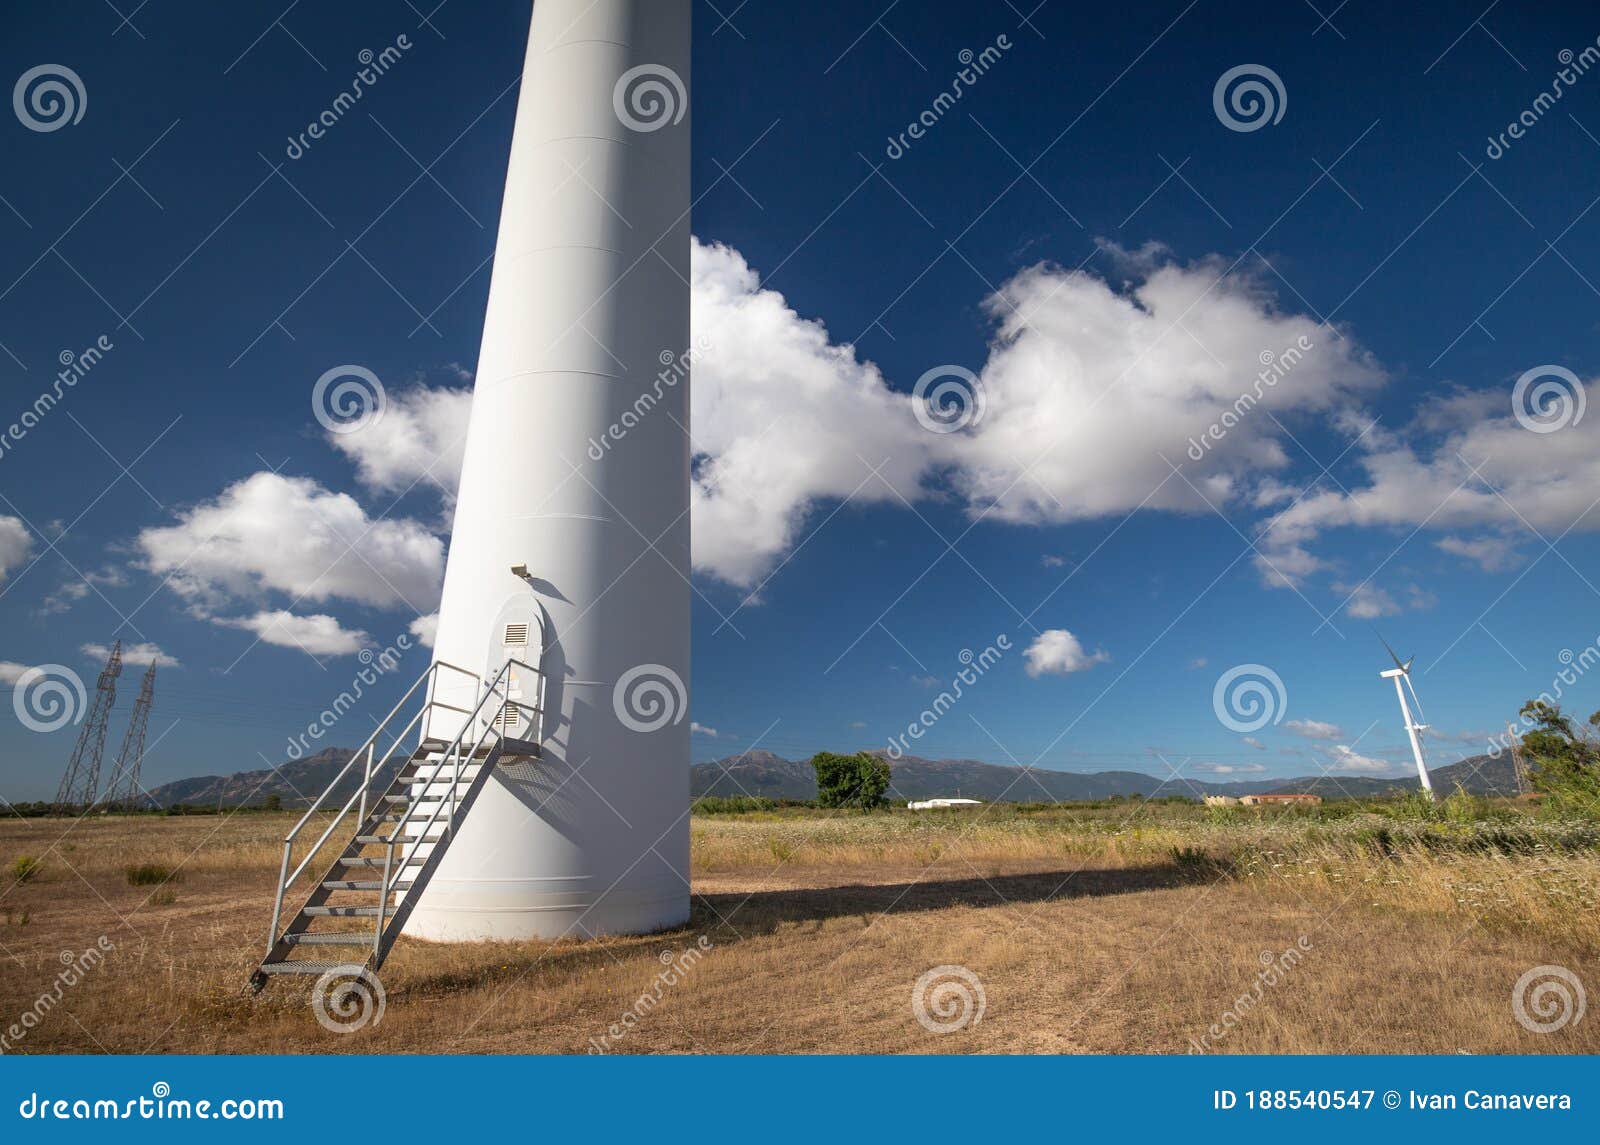 wind turbine with beautiful blue sky